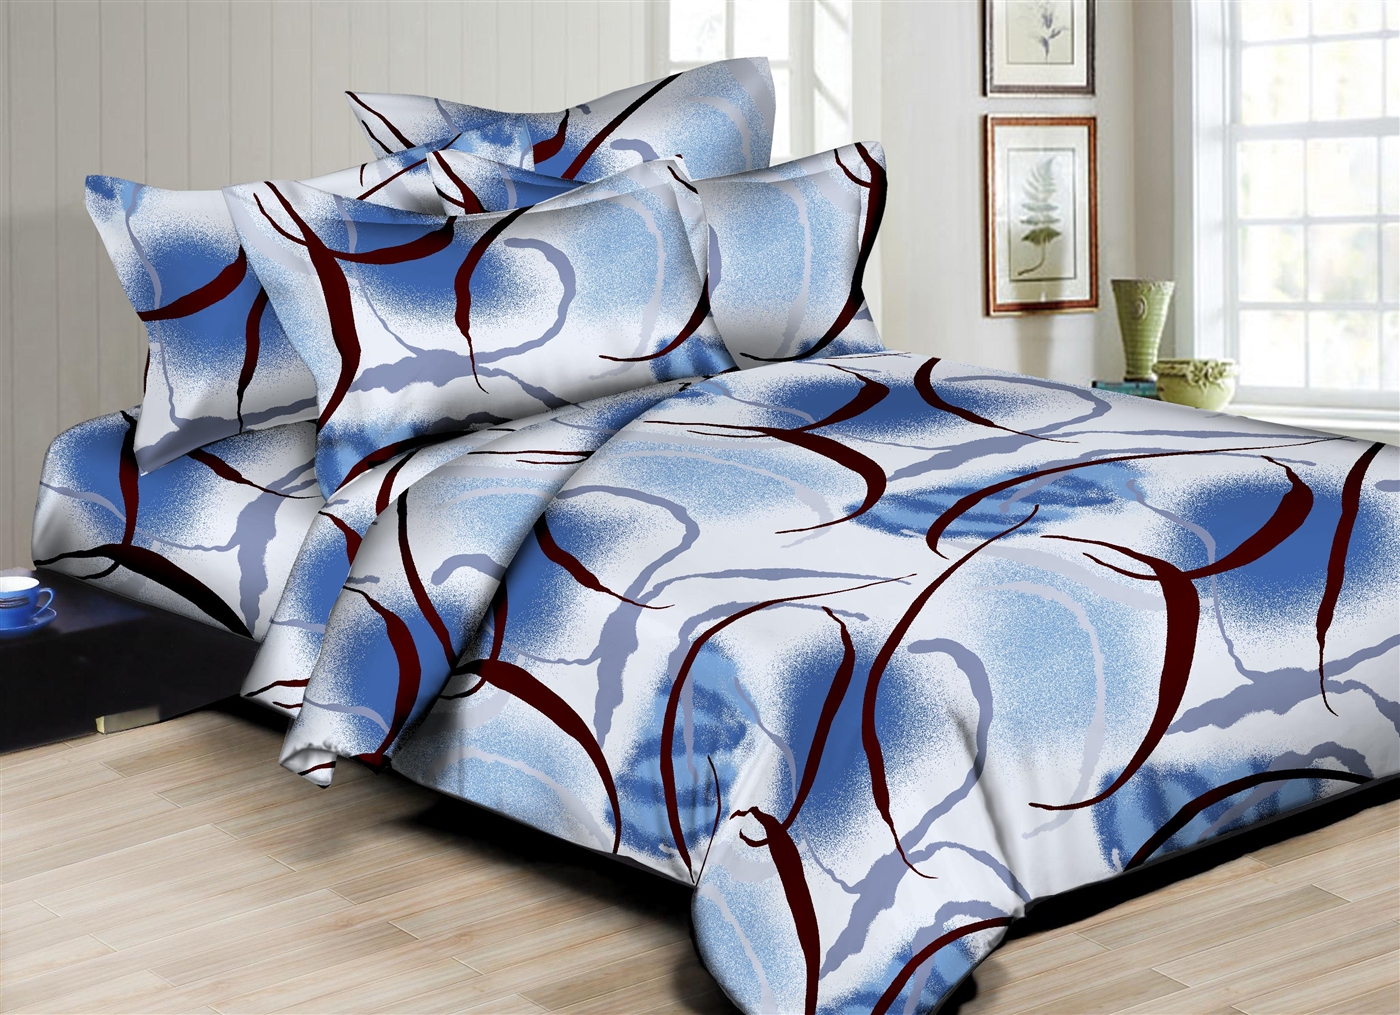 Artistic Peels Blue 6PC Twin Bedding Set